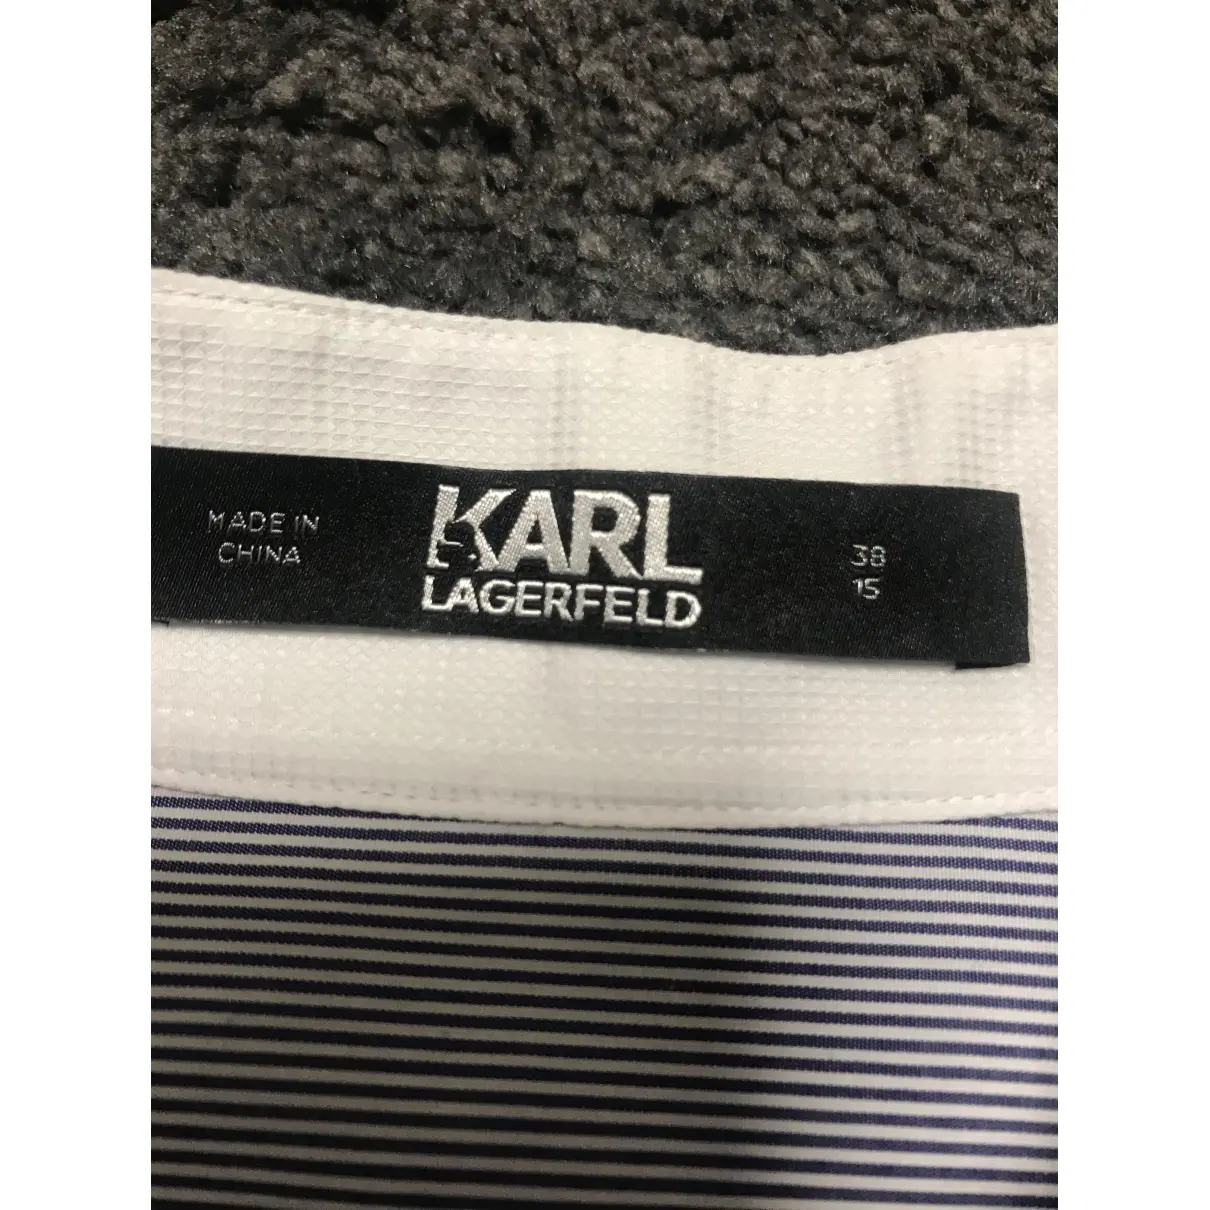 Buy Karl Lagerfeld Shirt online